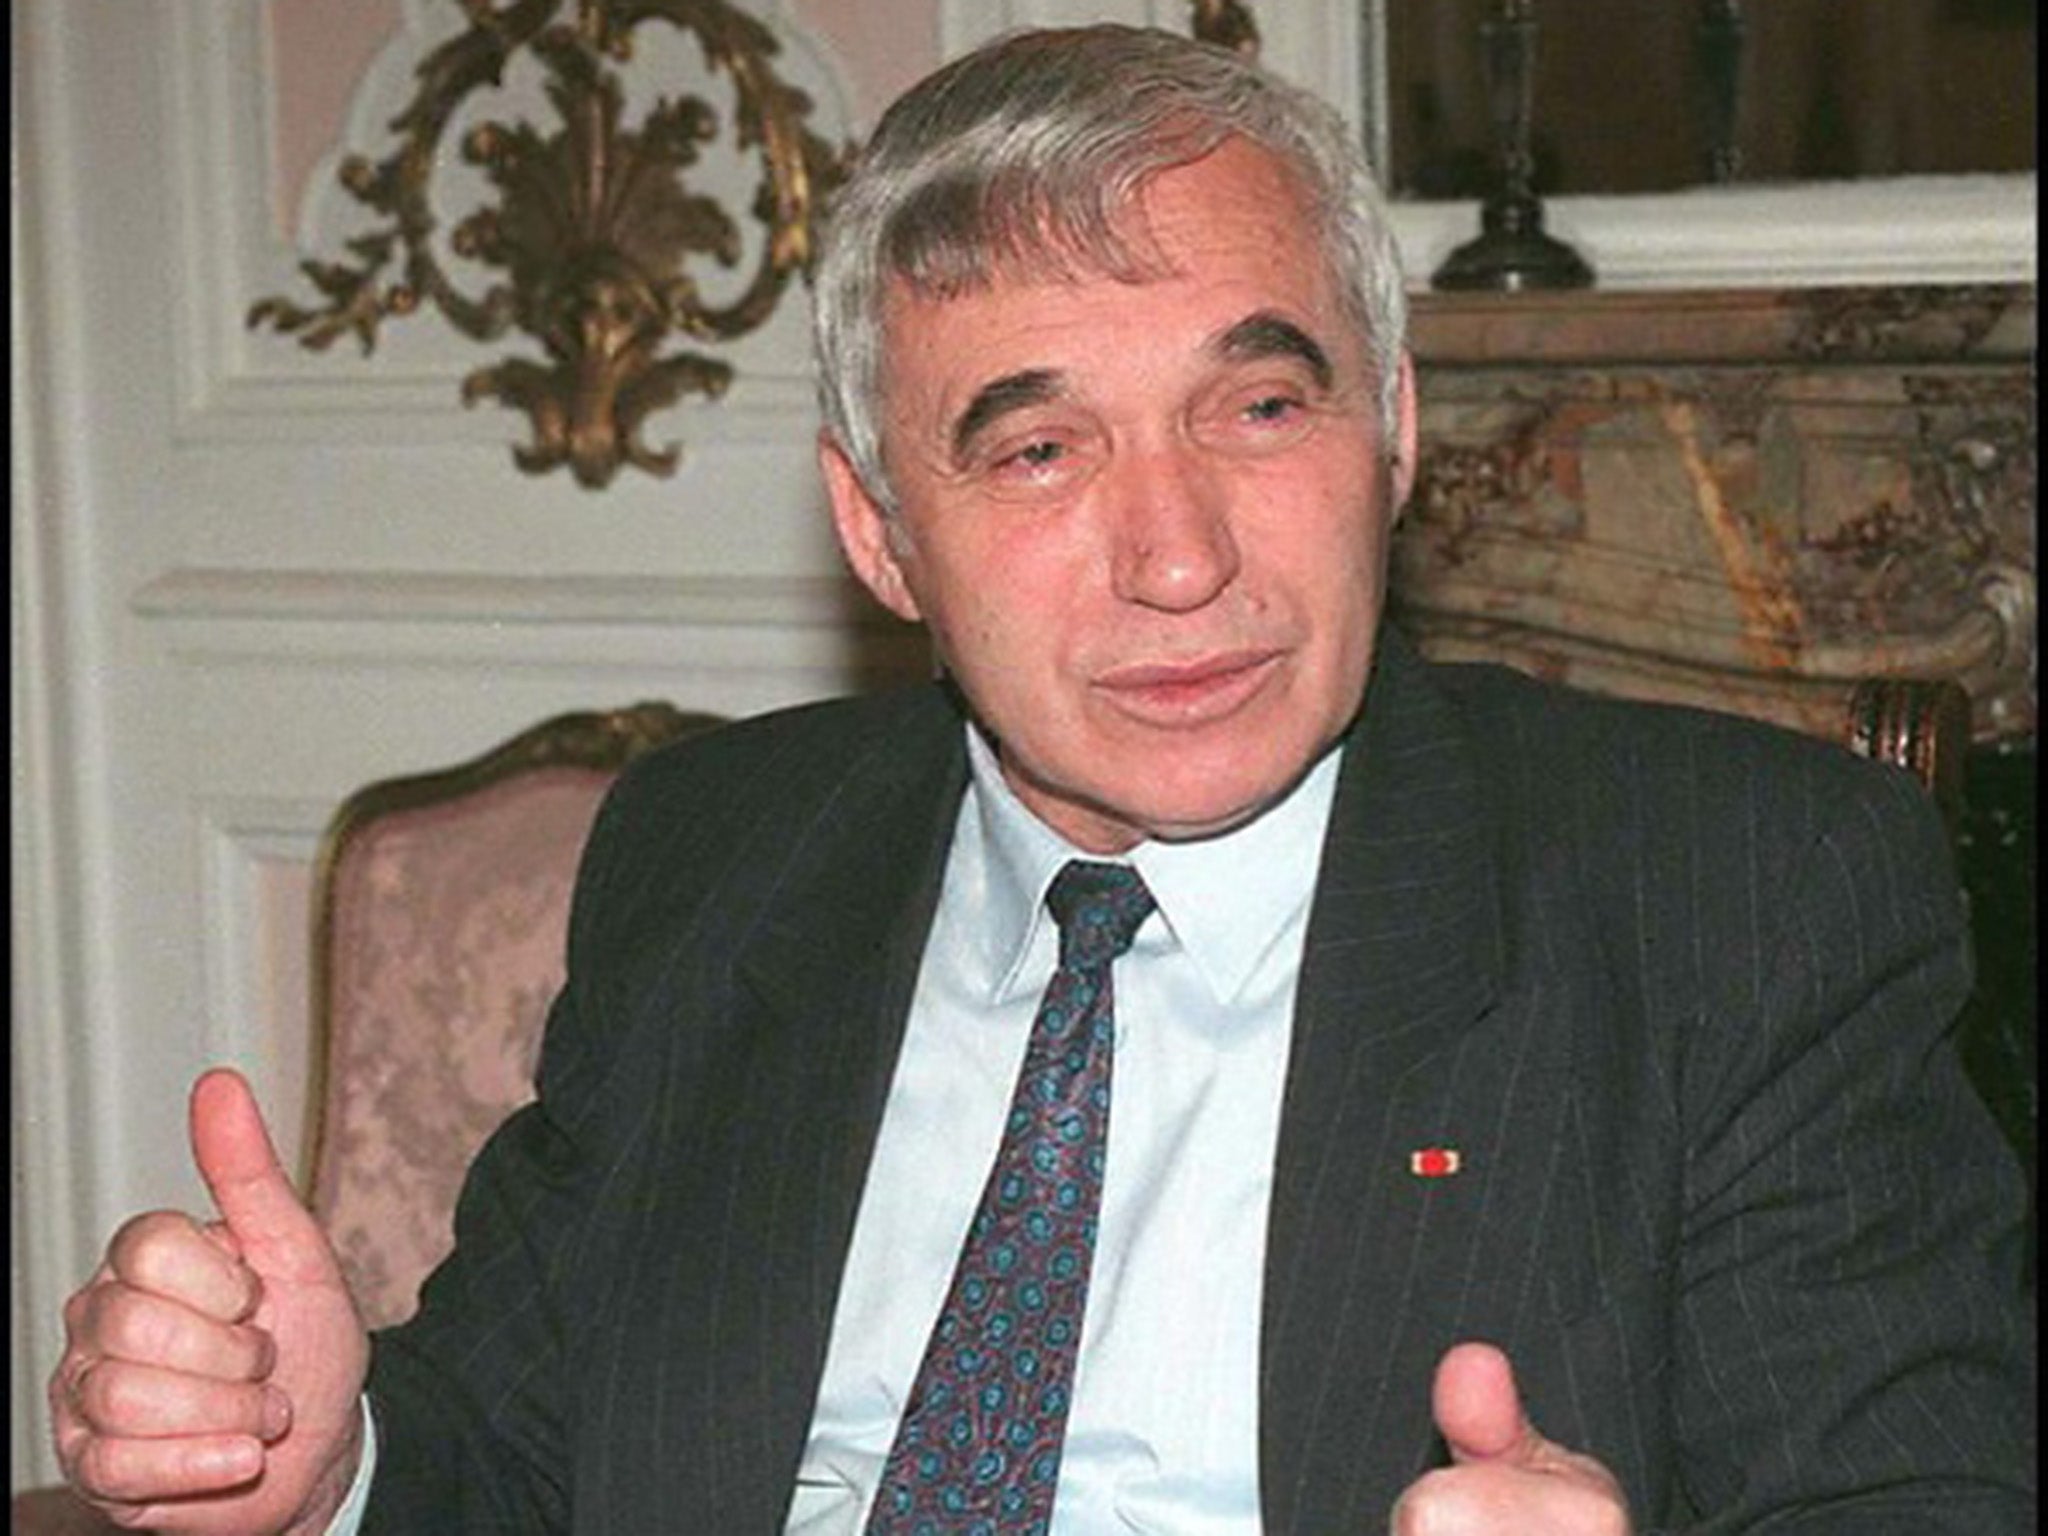 Zhelyu Zhelev was Bulgaria’s first democratically elected head of state